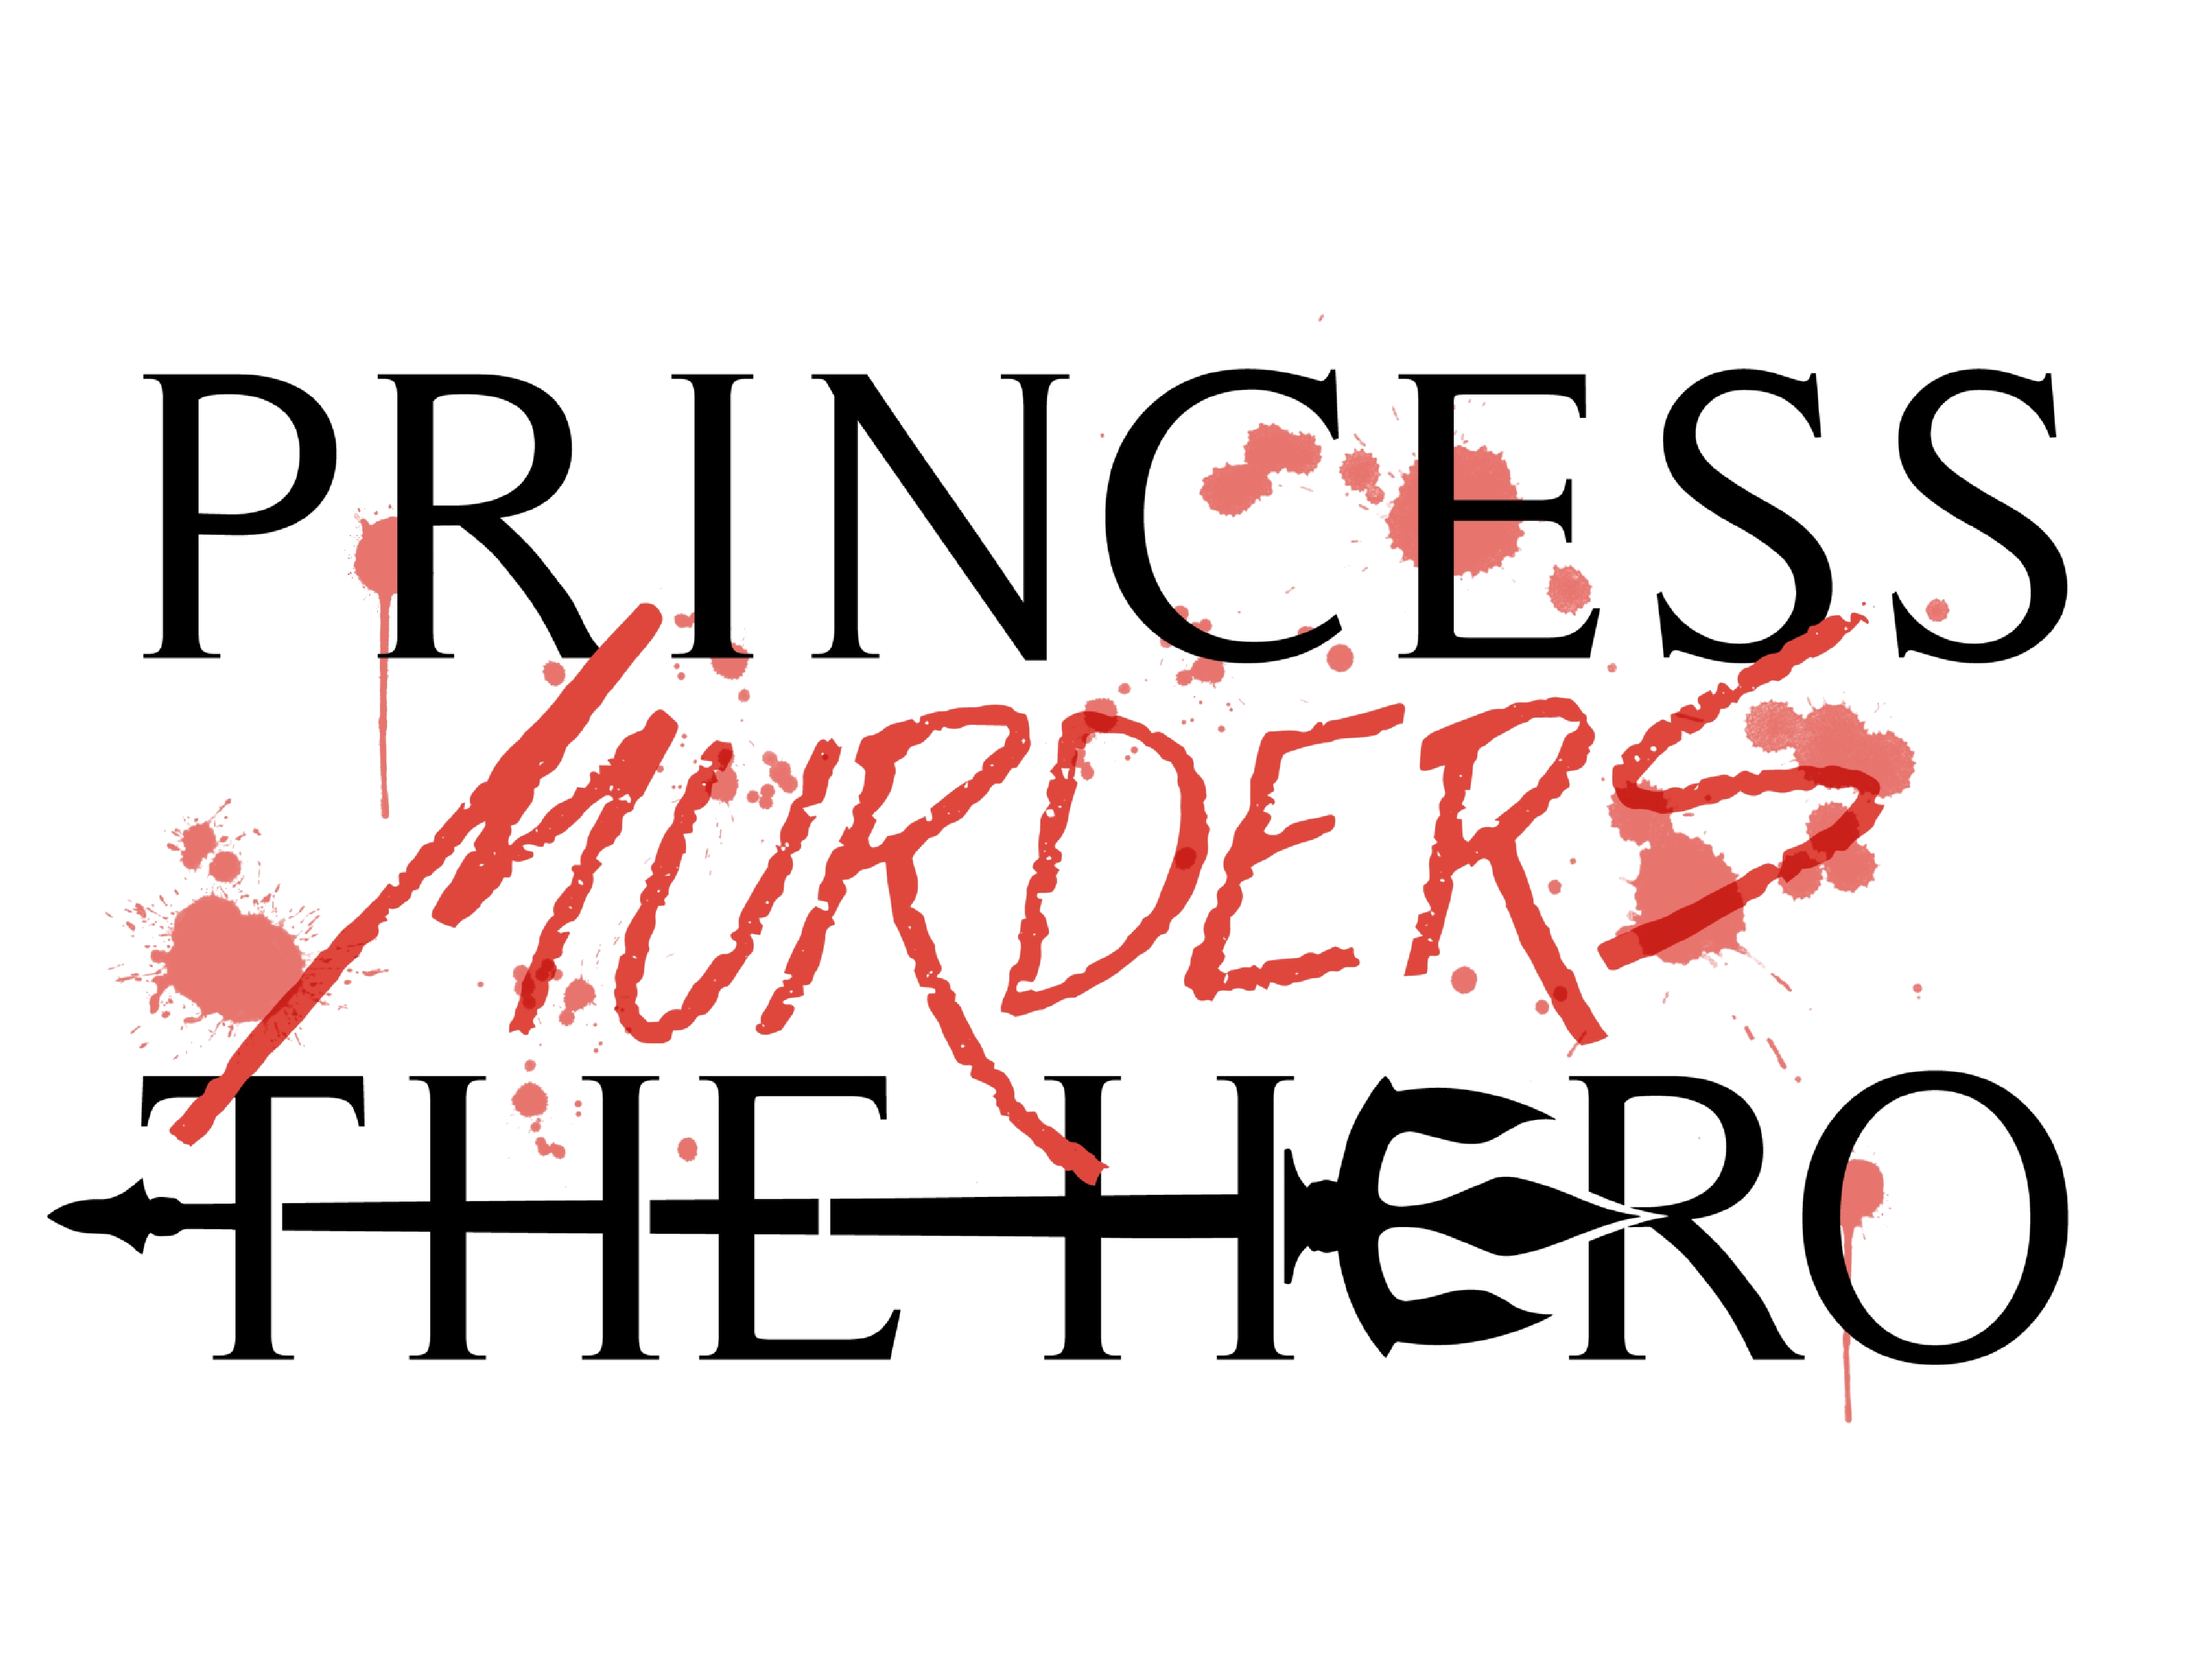 PRINCESS MURDERS THE HERO